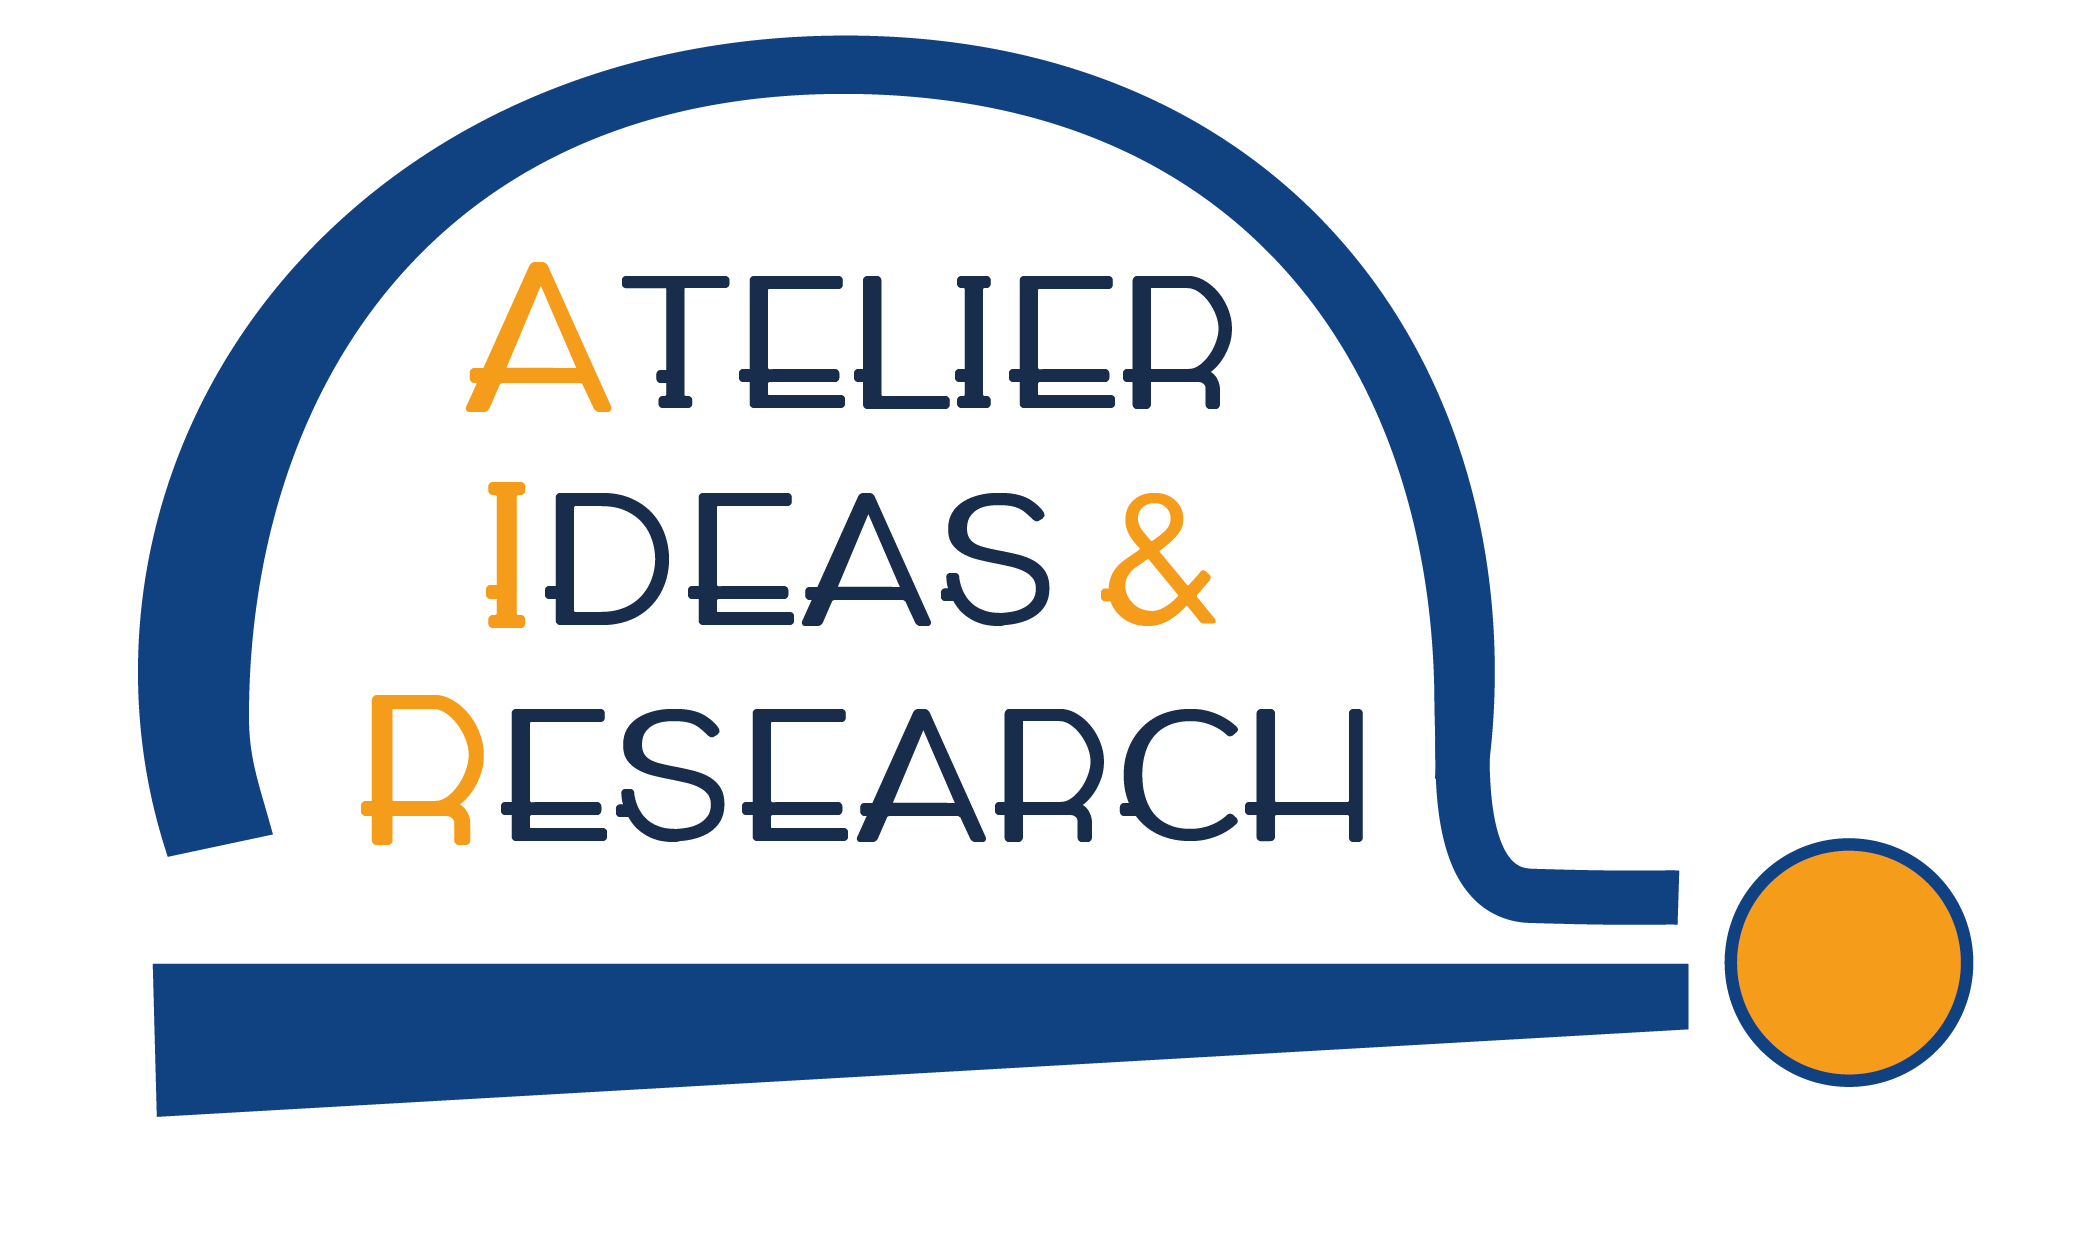  Atelier ideas & research